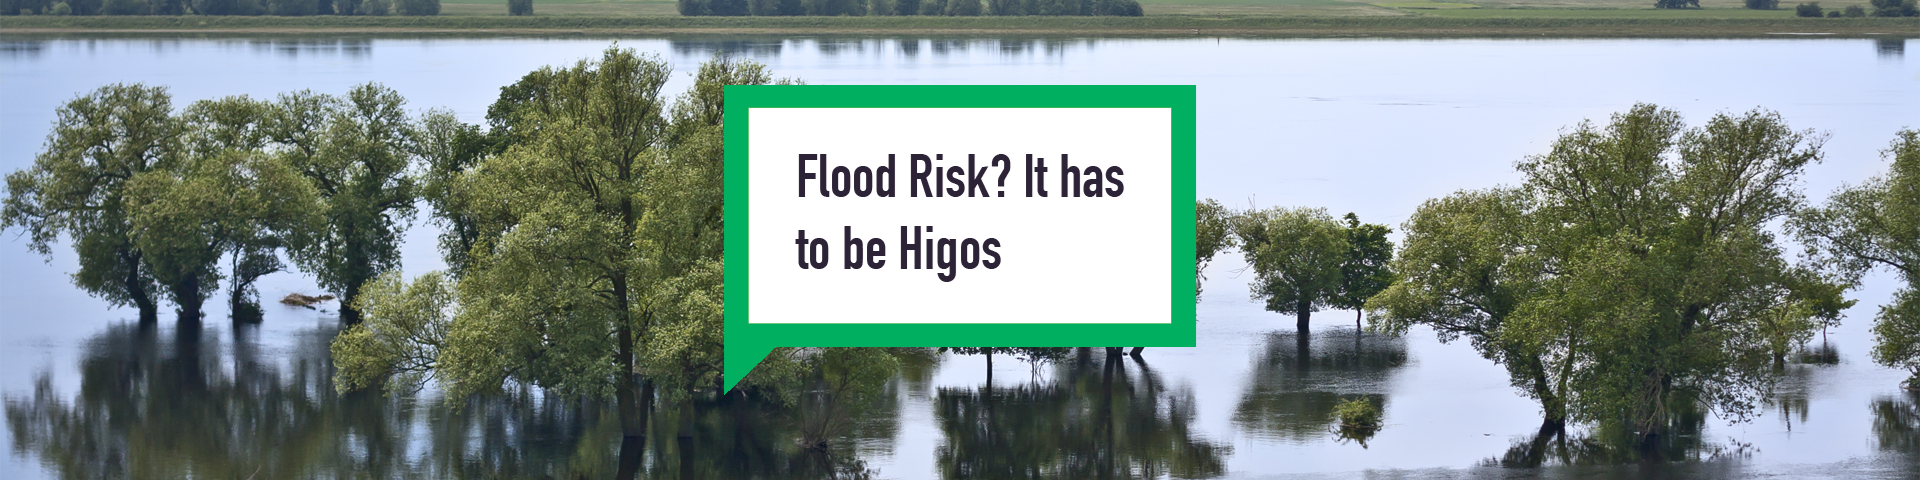 Higos flood risk